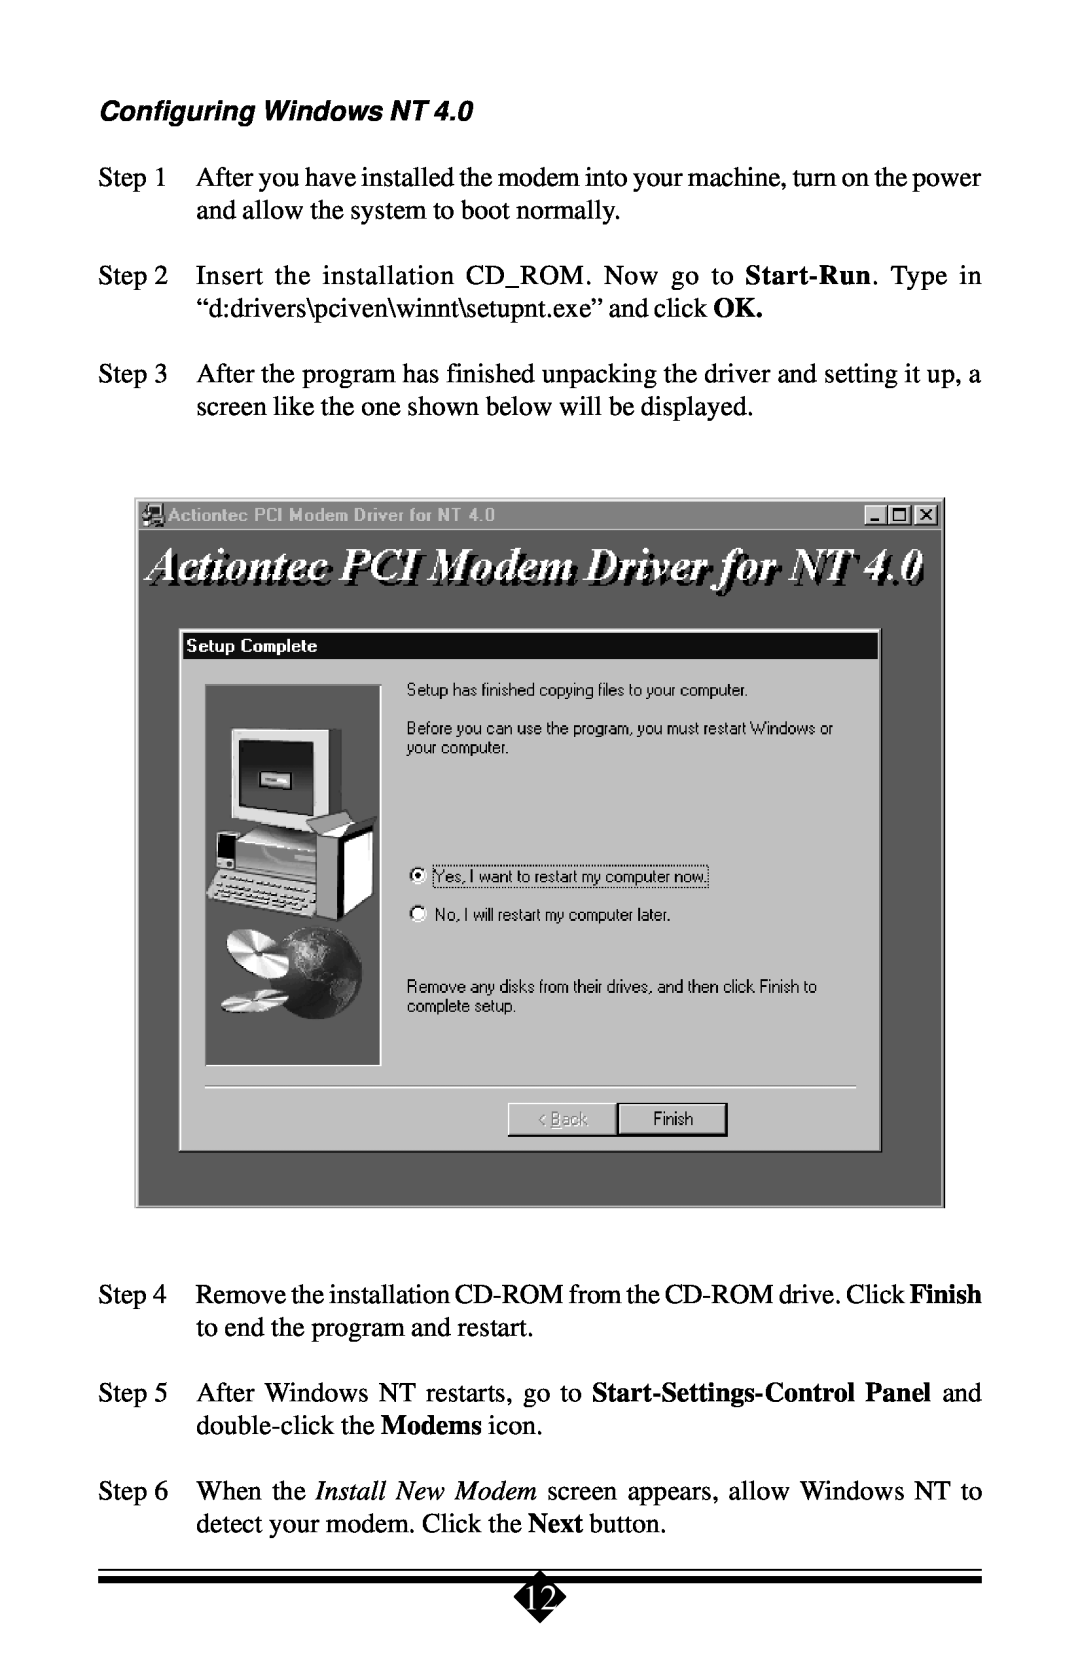 Actiontec electronic 56K manual Configuring Windows NT 